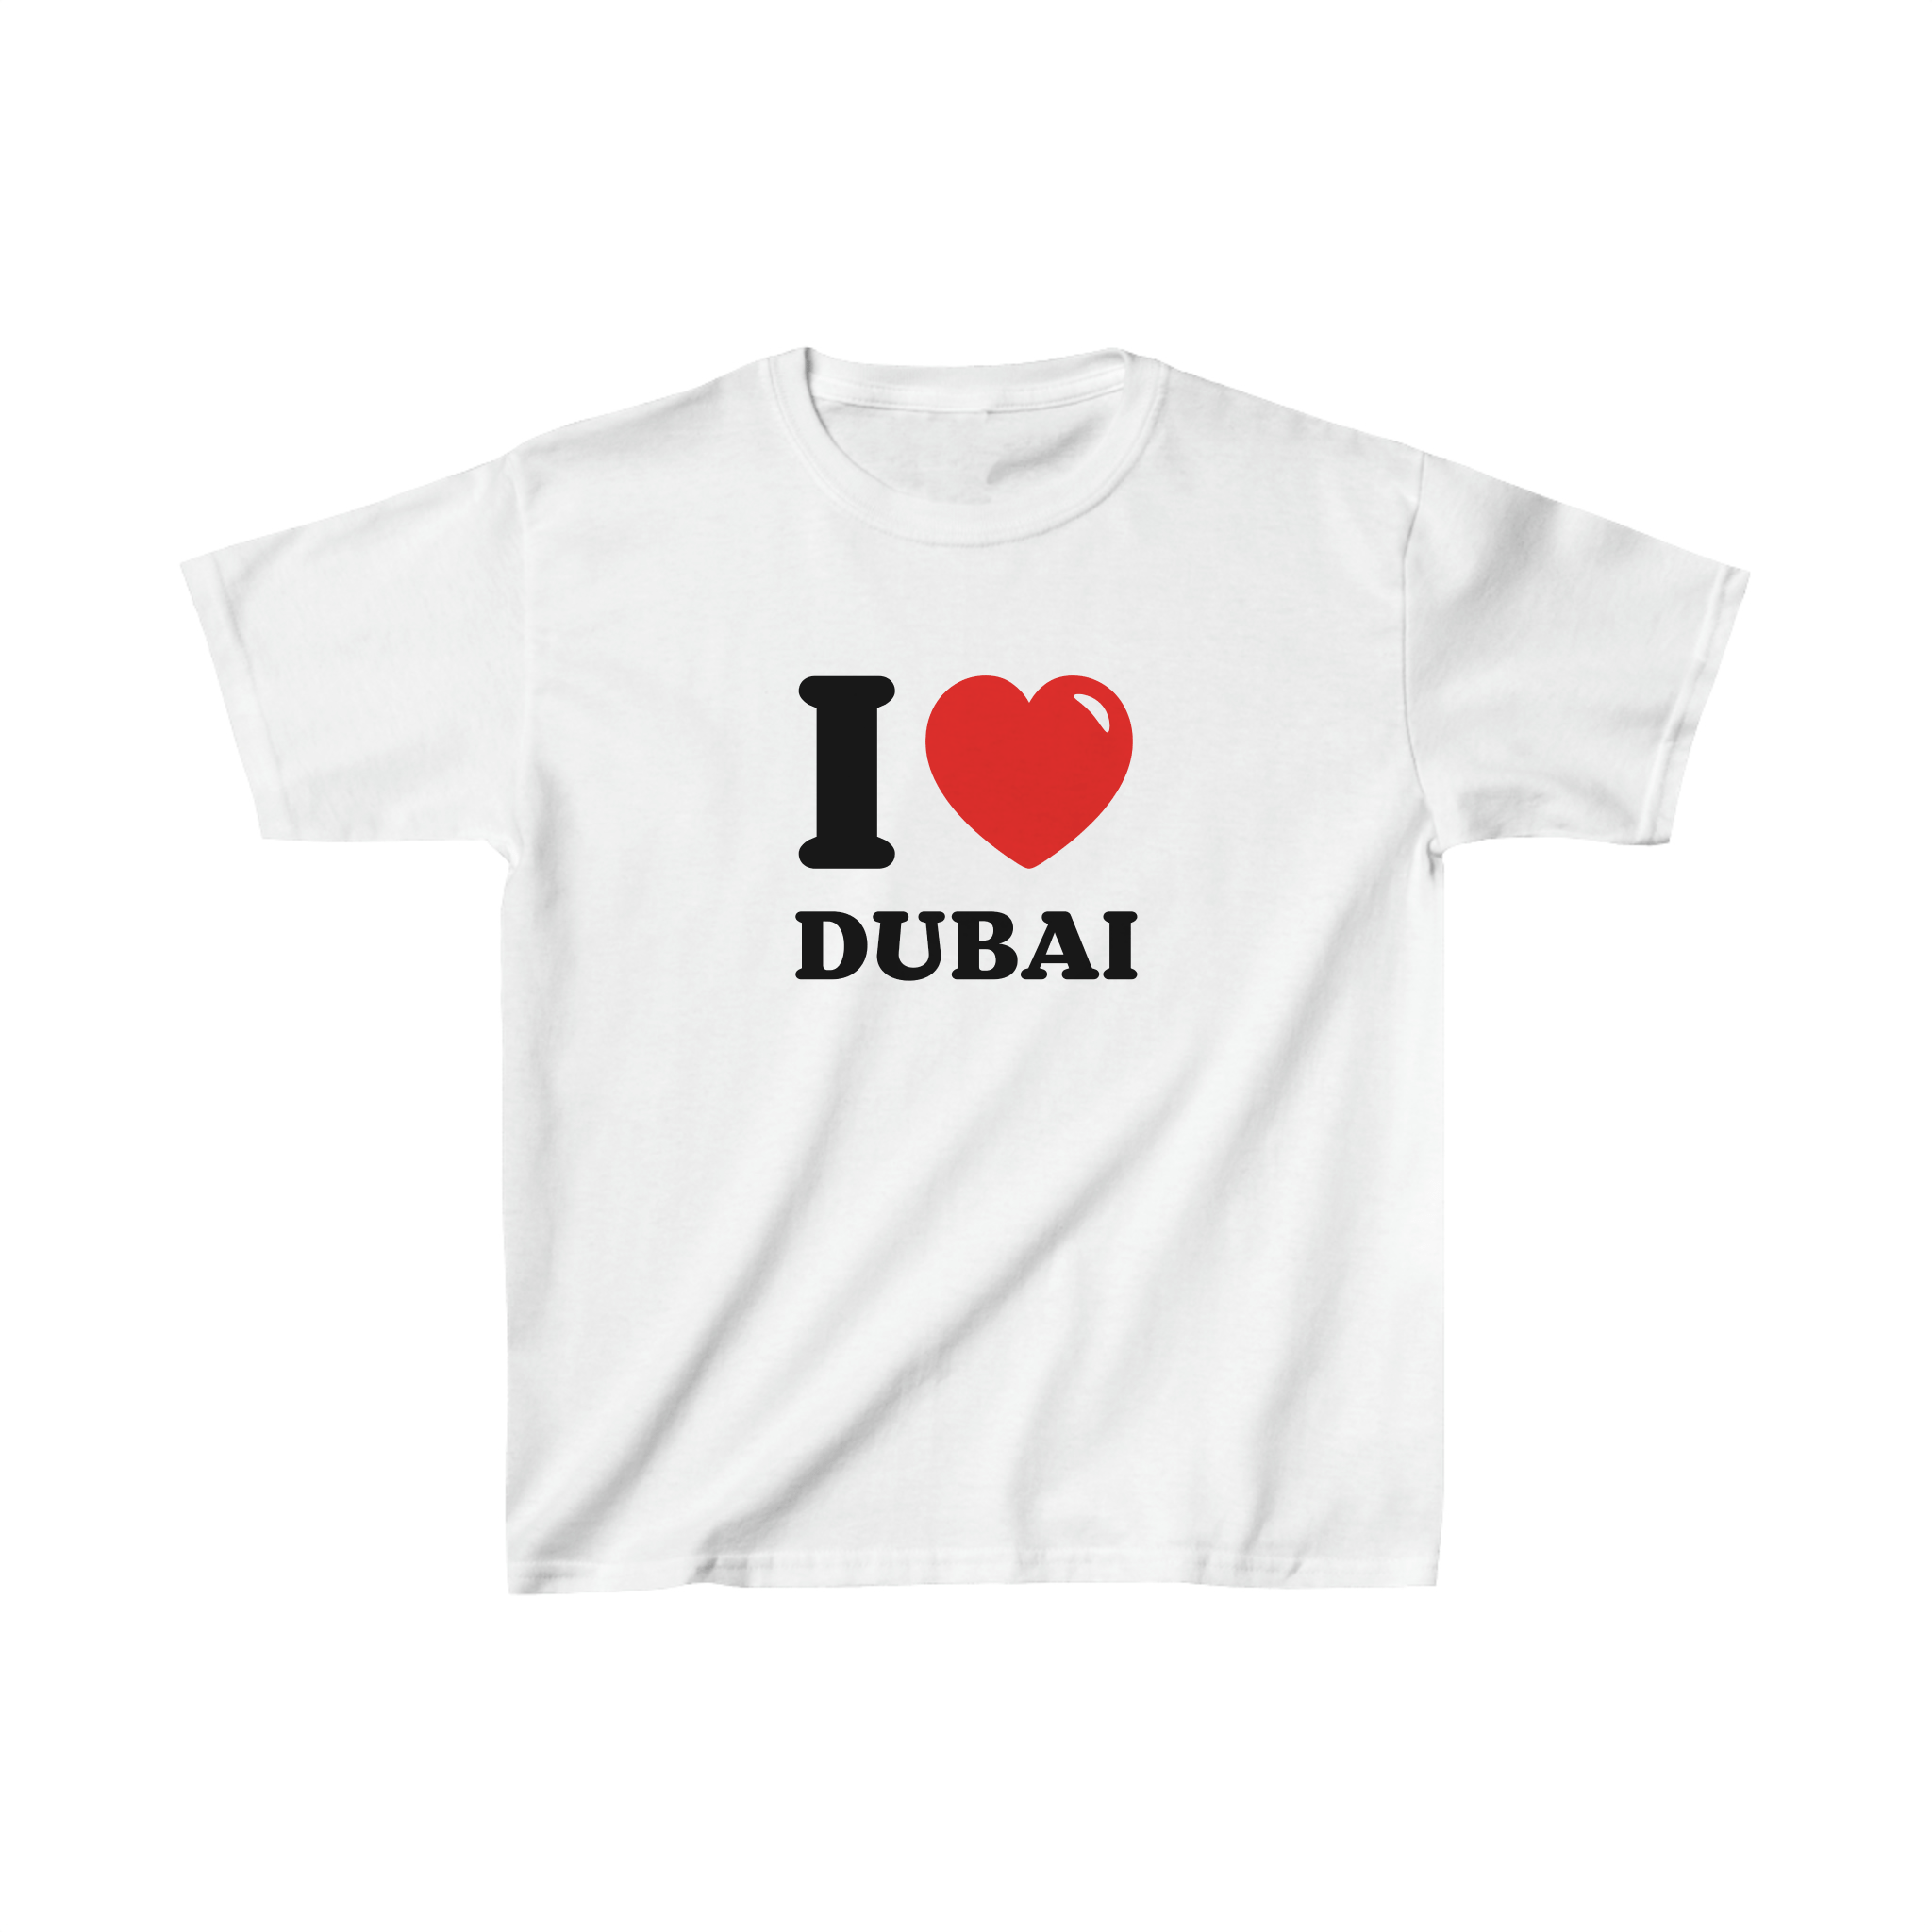 'I love Dubai' baby tee - In Print We Trust